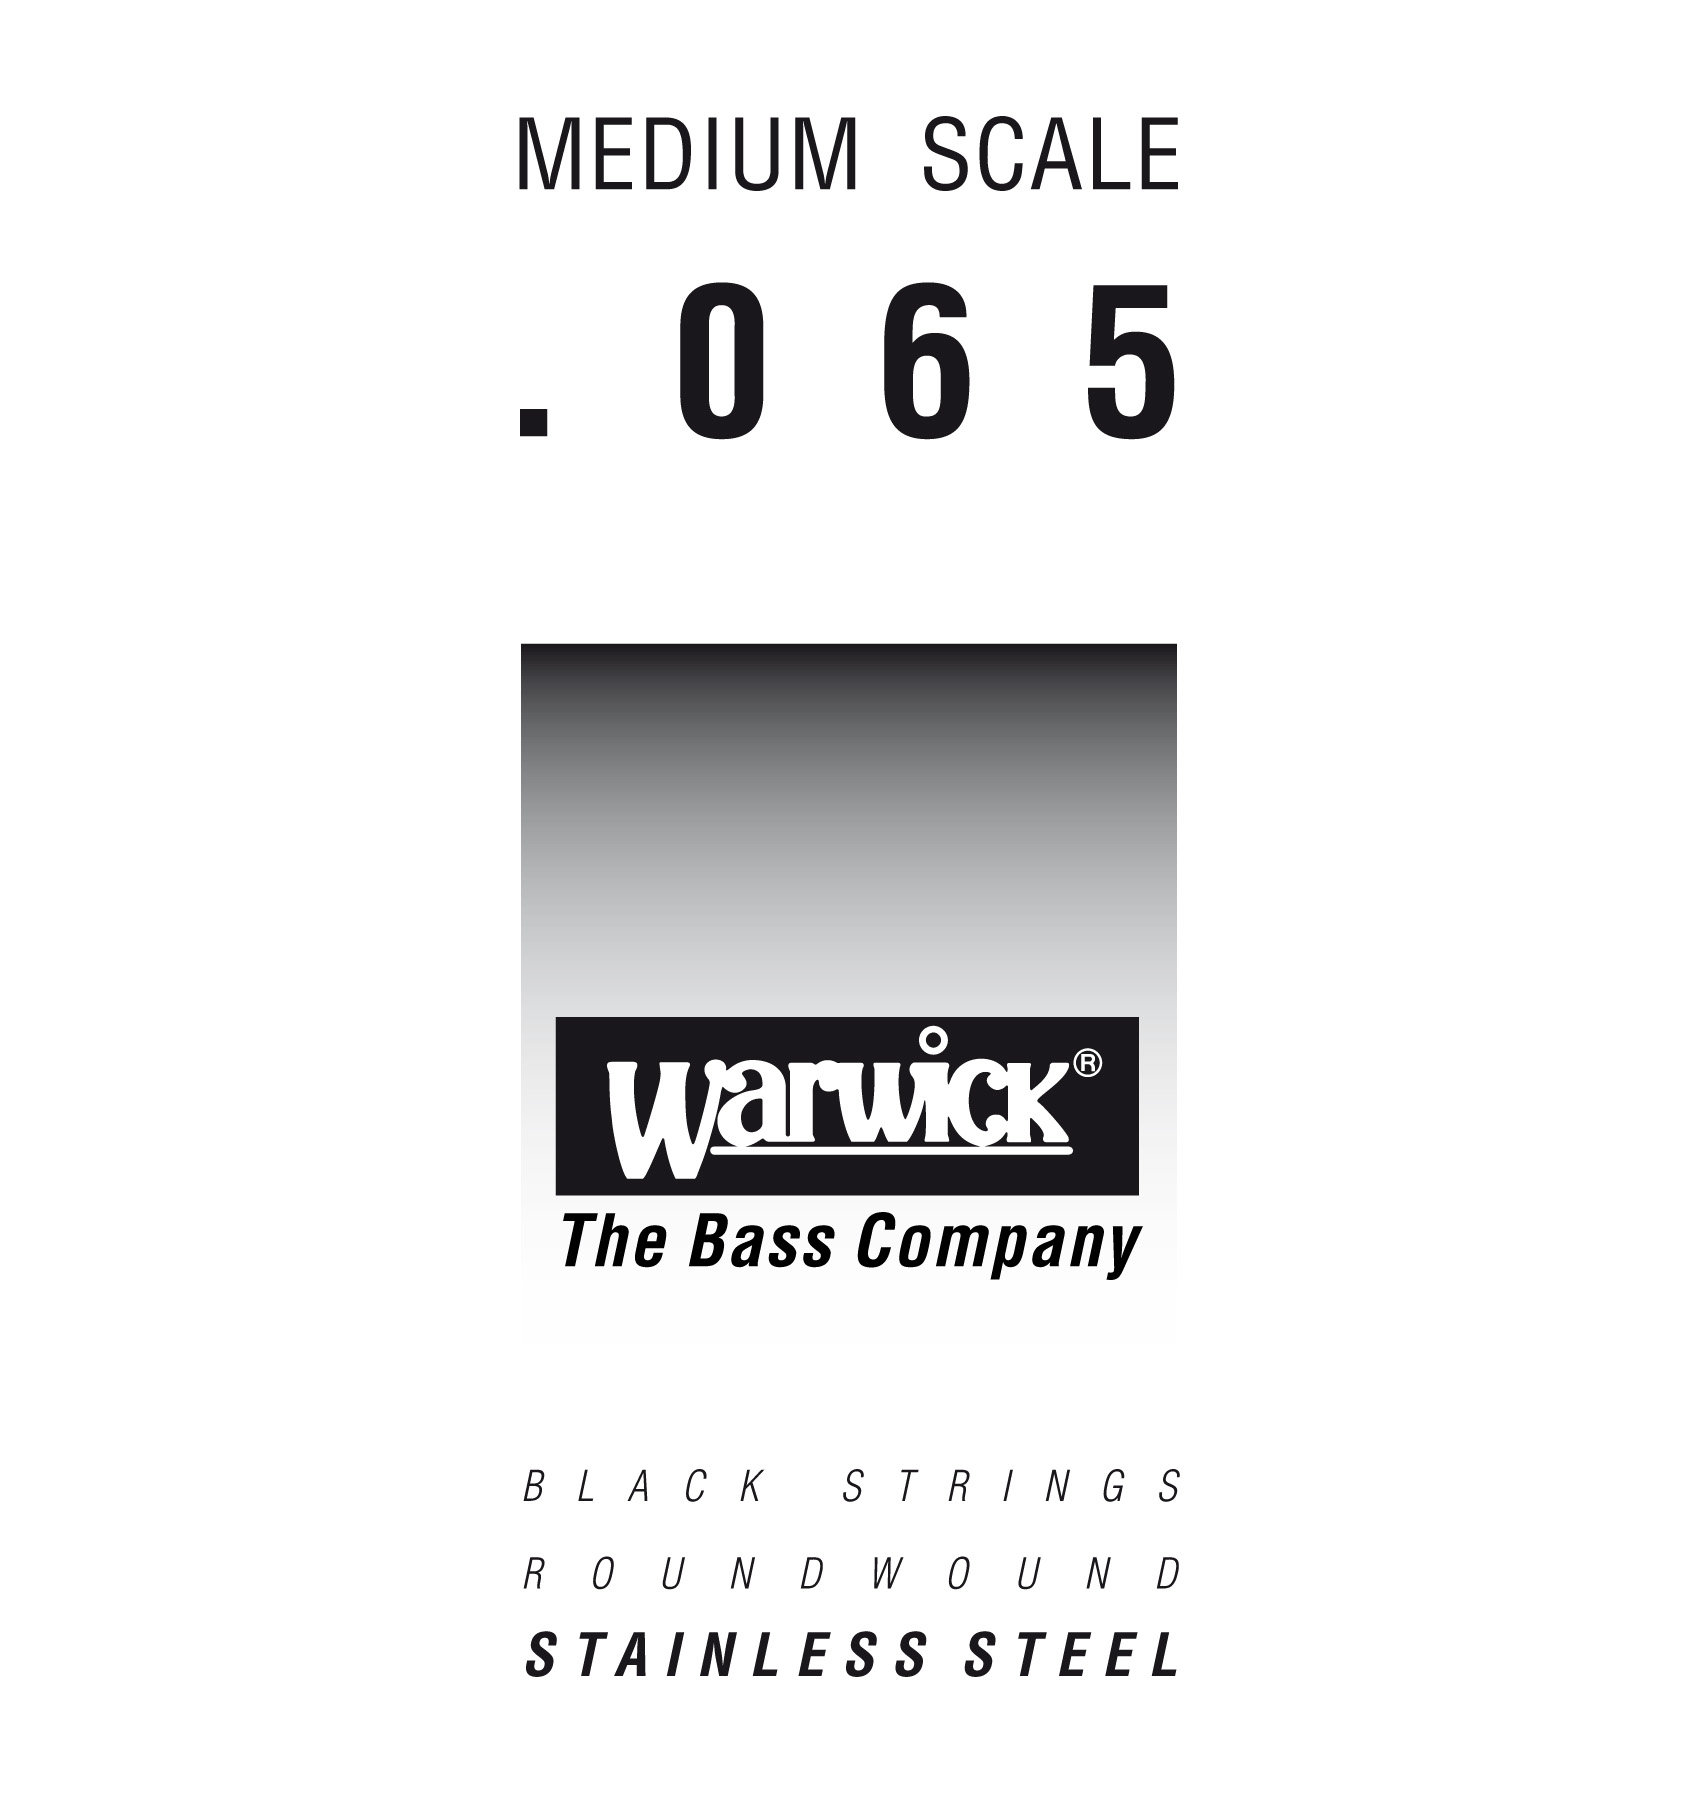 Warwick Black Label Bass Strings, Stainless Steel - Bass Single String, .065", Medium Scale